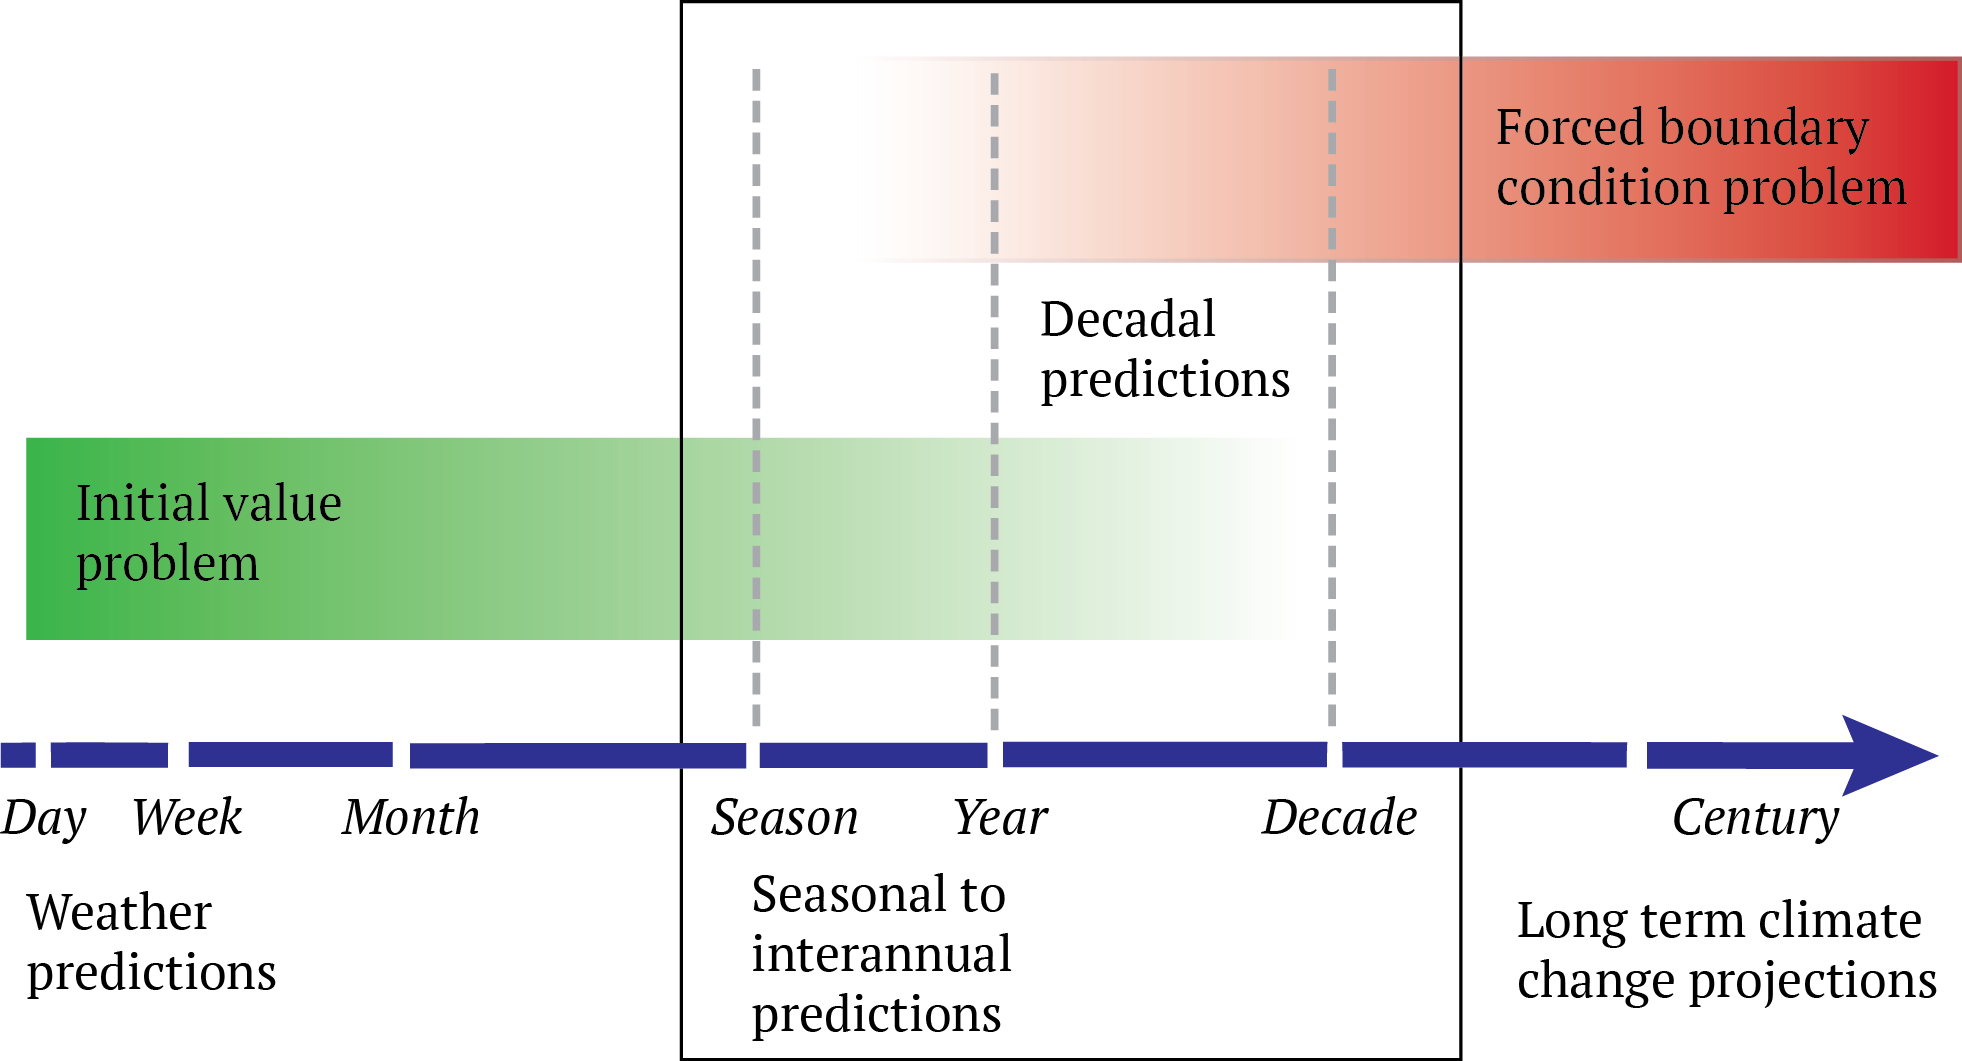 Decadal predictions